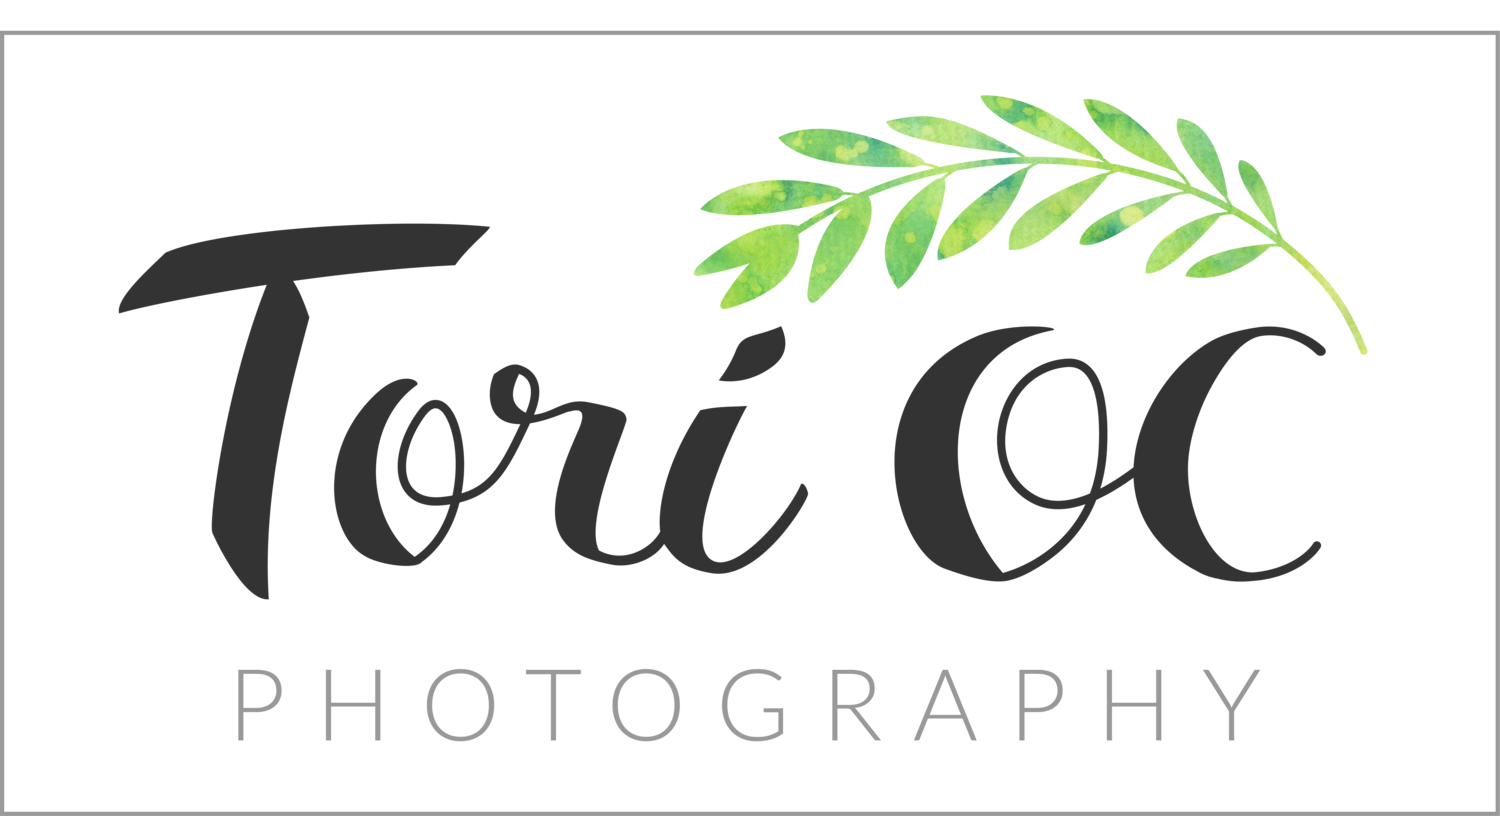 Tori oc Photography